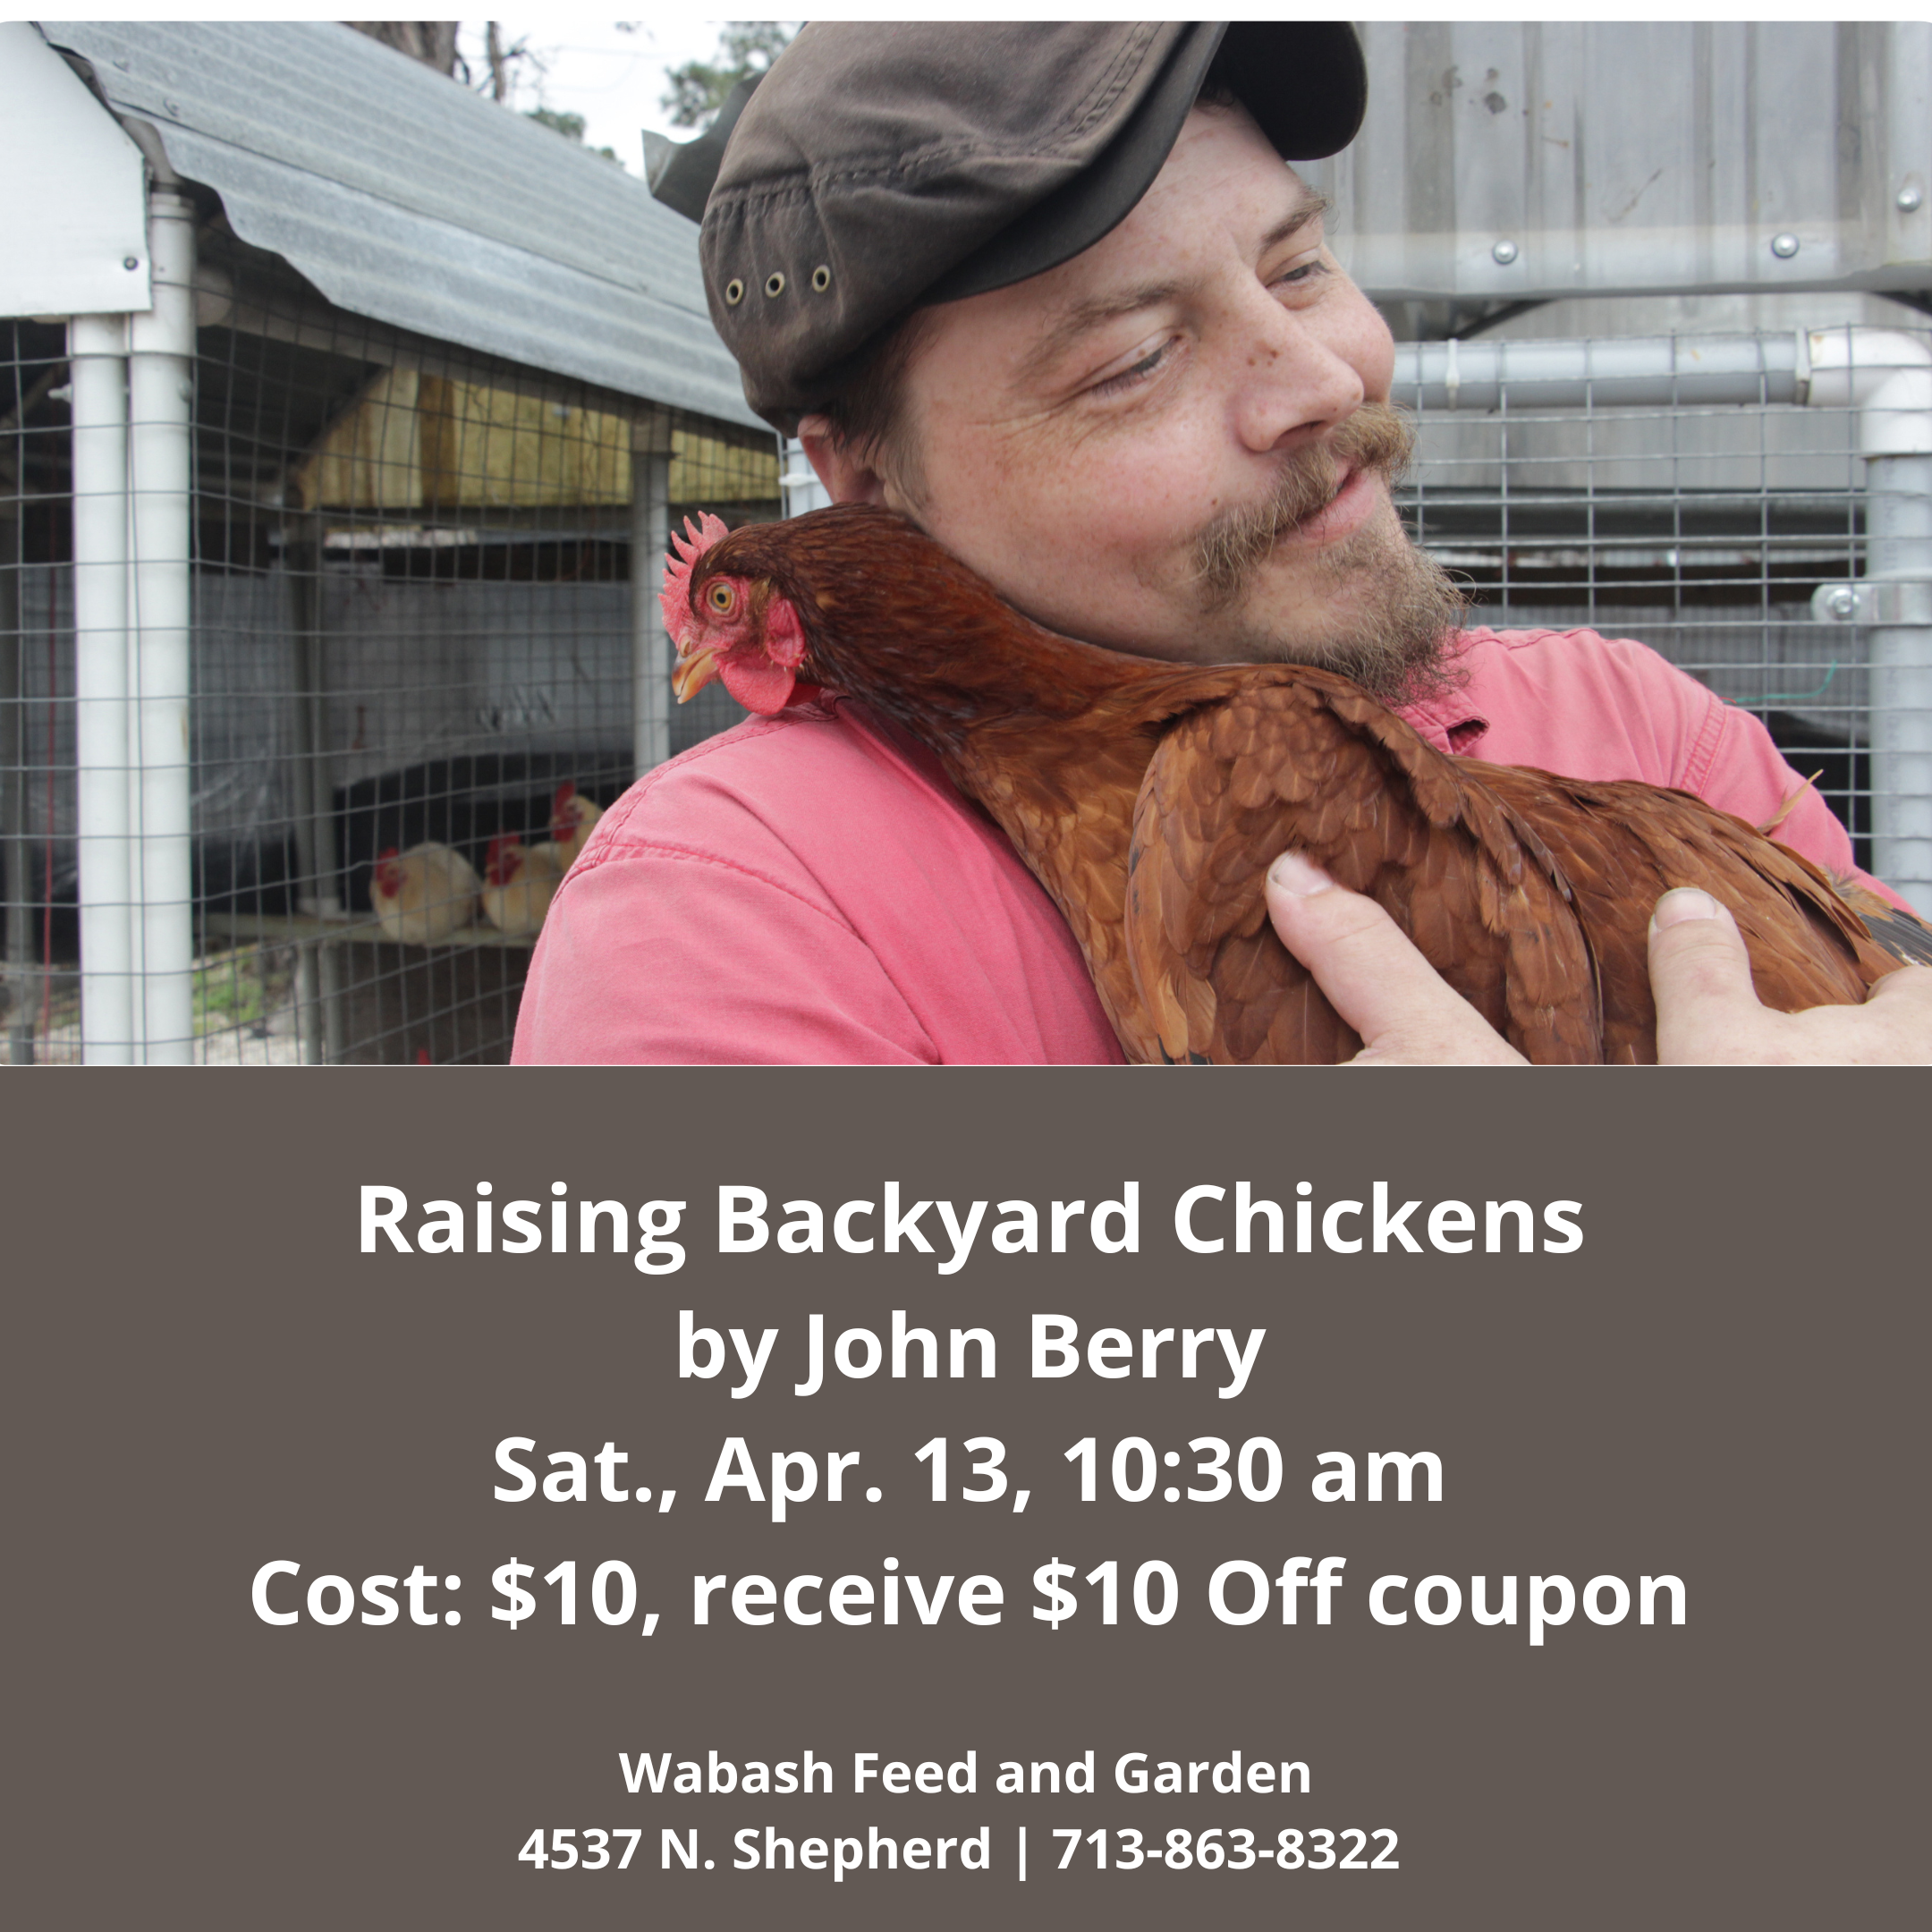 Copy of Raising Backyard Poultry